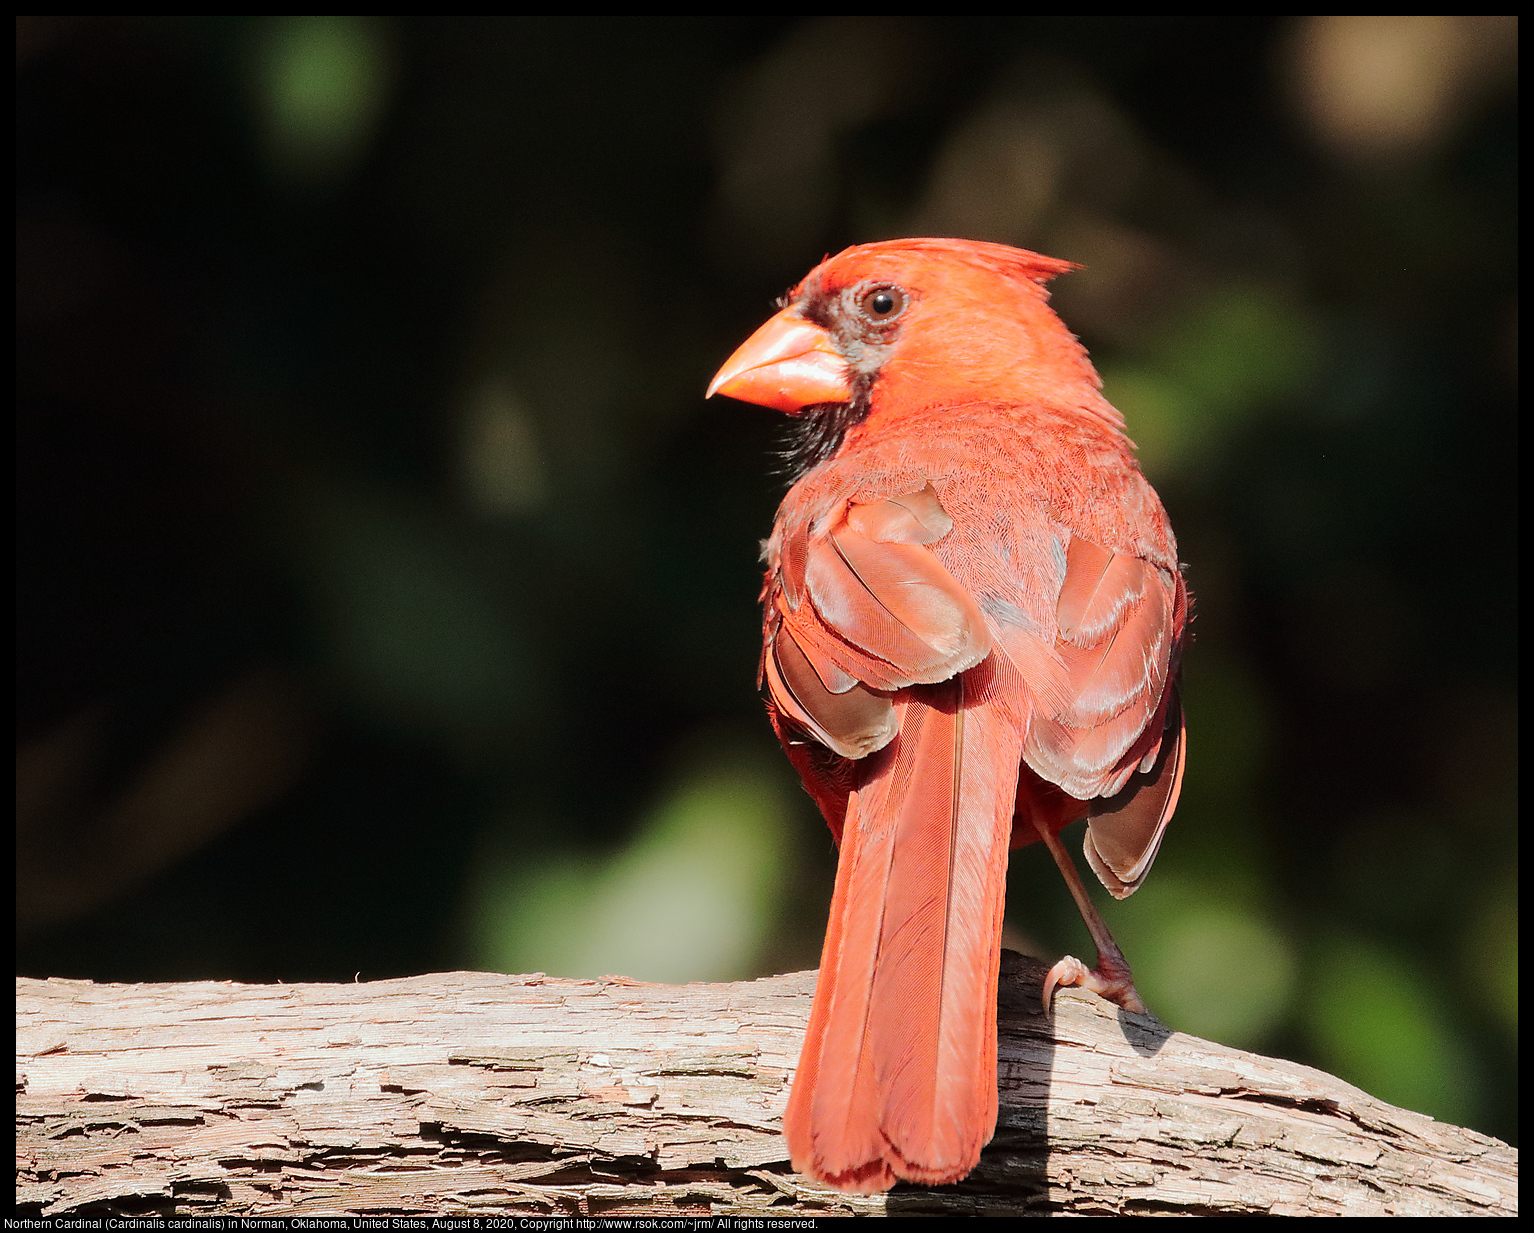 Northern Cardinal (Cardinalis cardinalis) in Norman, Oklahoma, United States, August 8, 2020